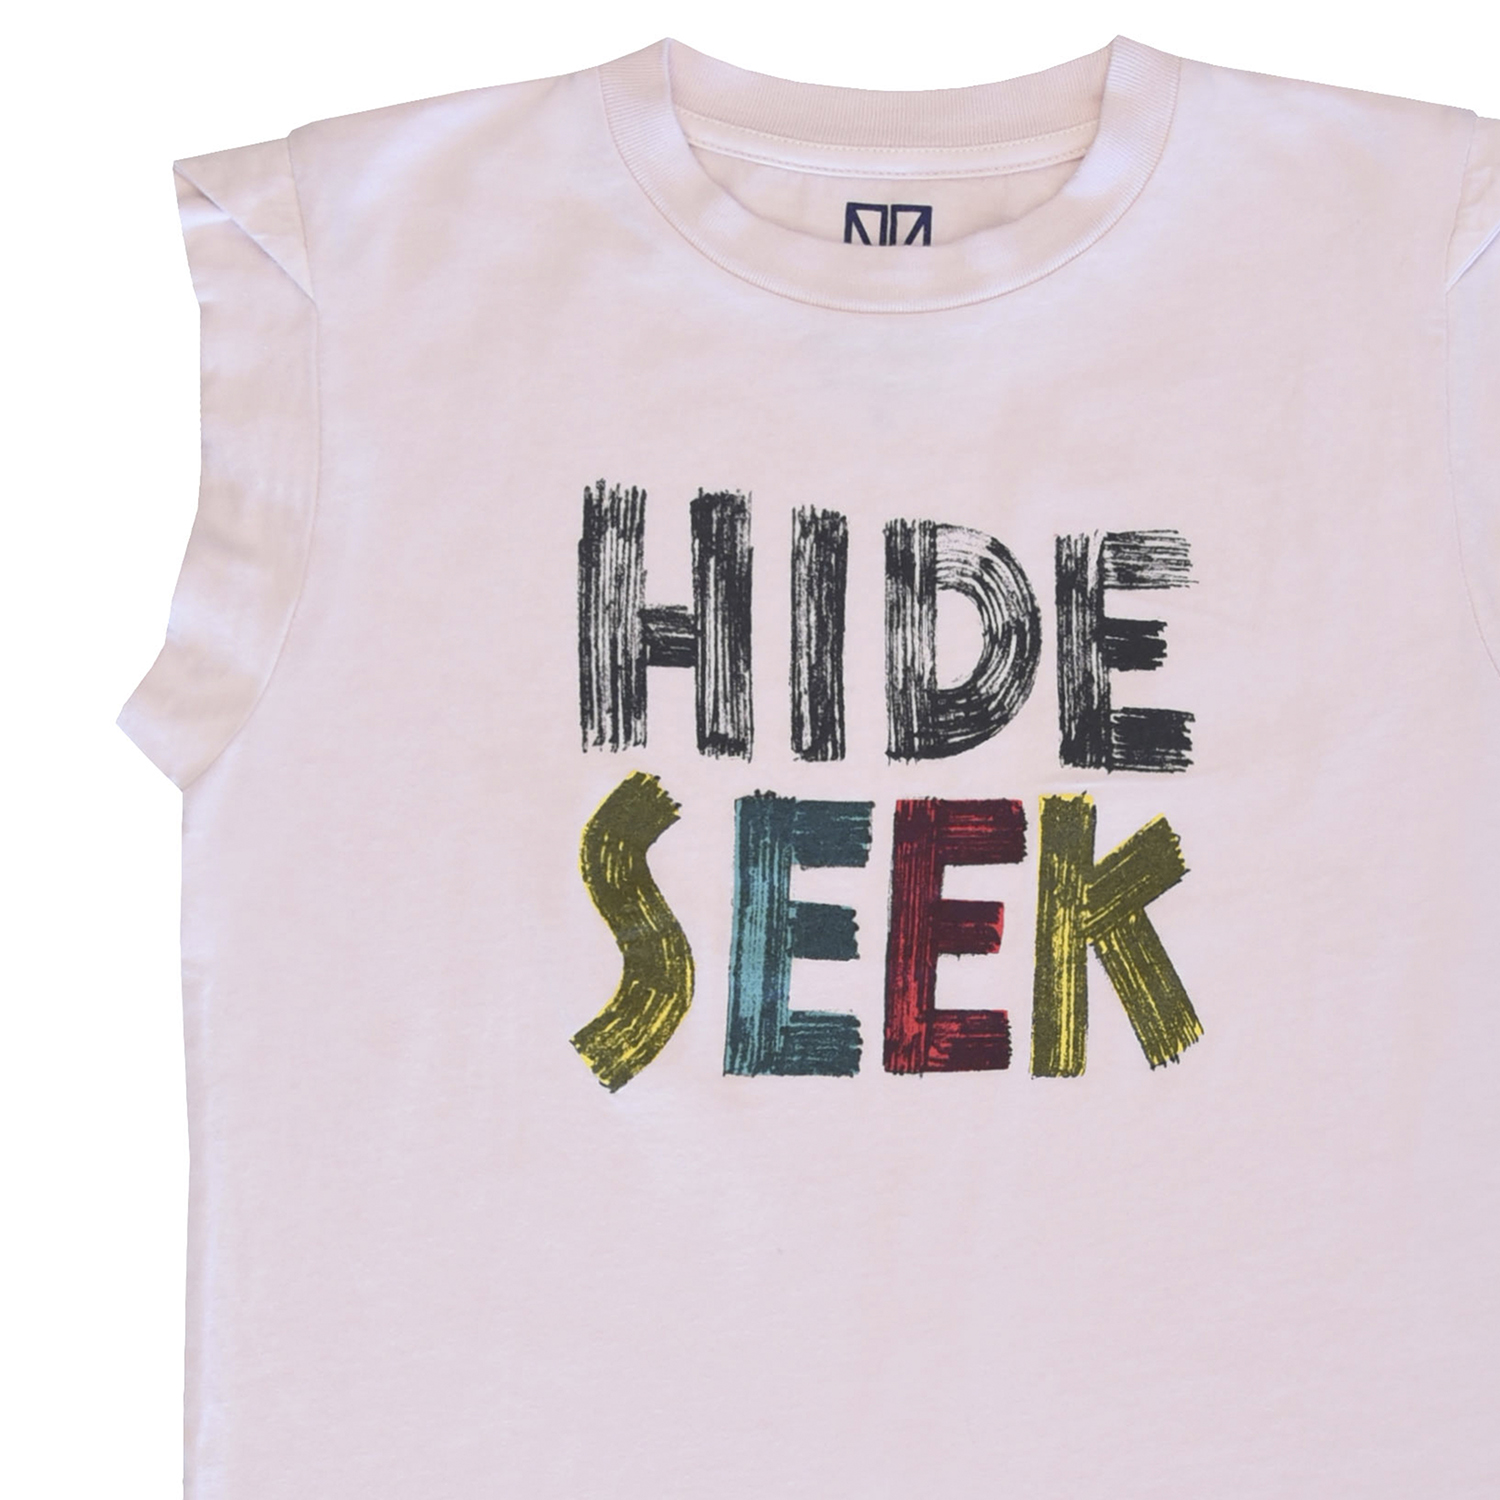 hide and seek shirt